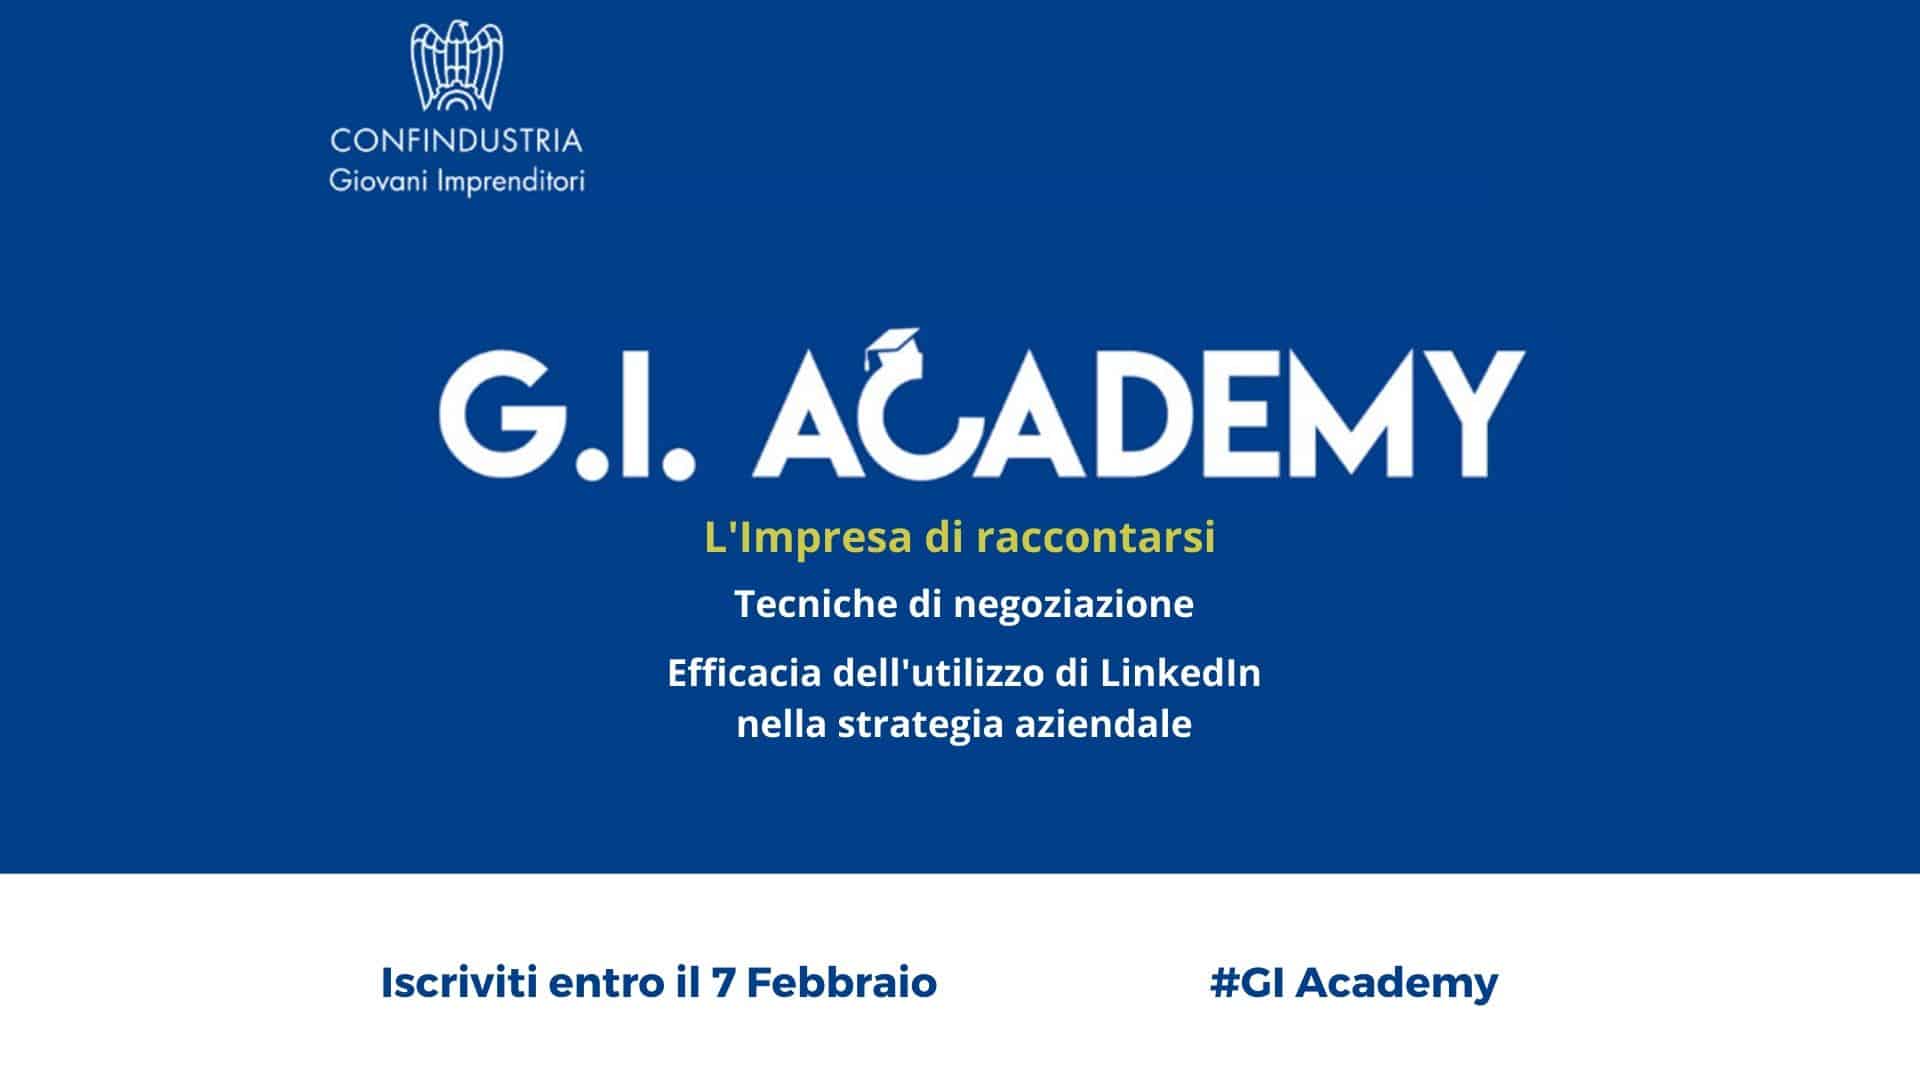 GI-Academy e Impresa di raccontarsi - 13 febbraio